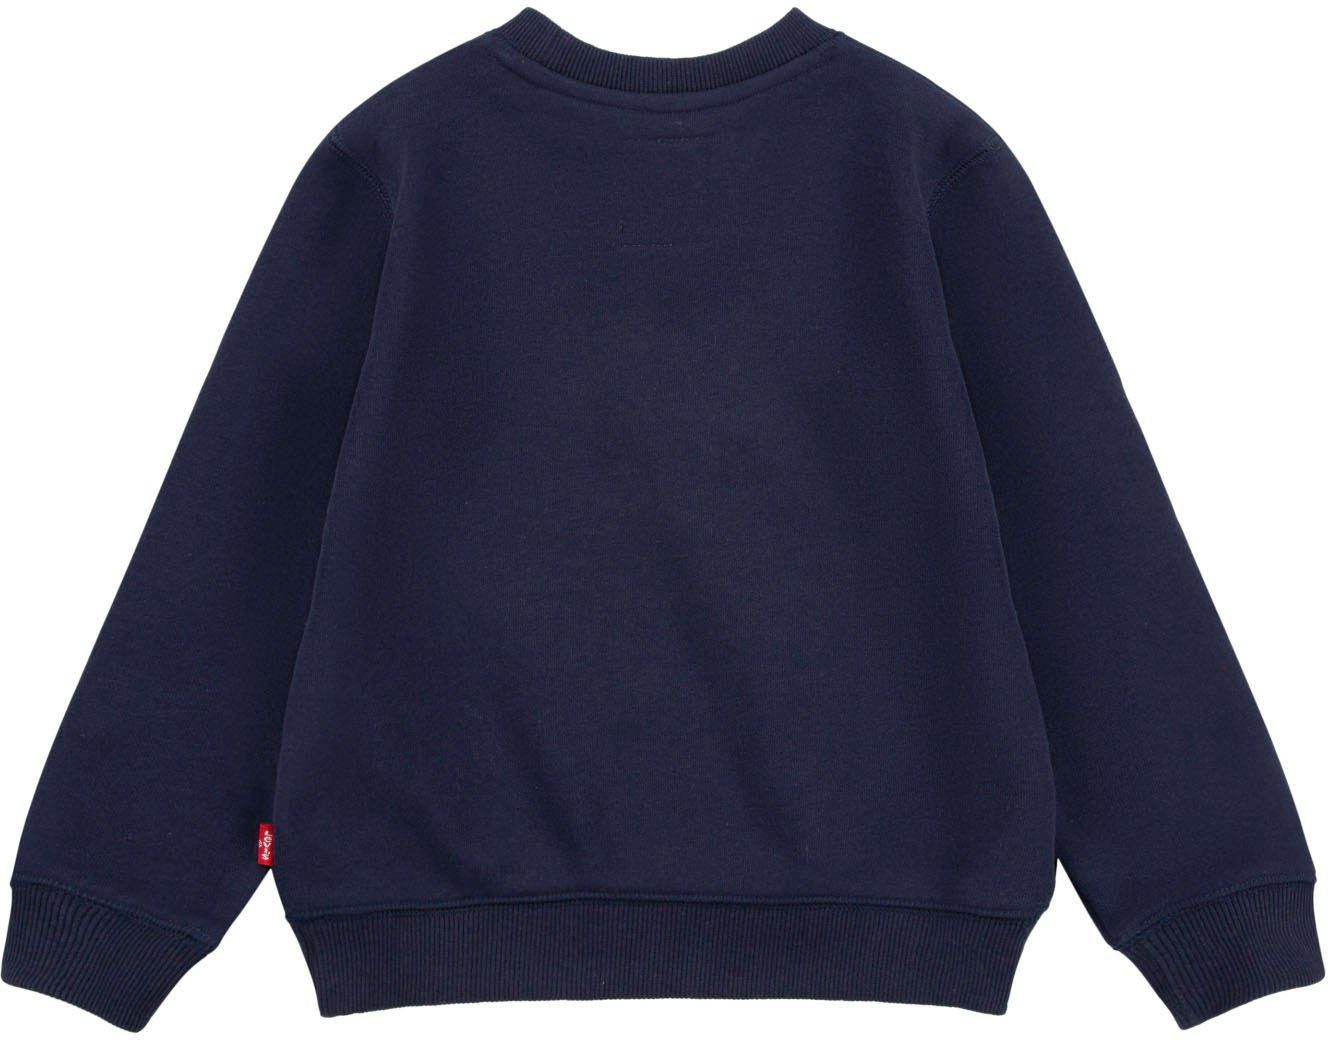 Kids SWEATSHIRT BATWING Levi's® CREWNECK Sweatshirt UNISEX DRESS BLUES